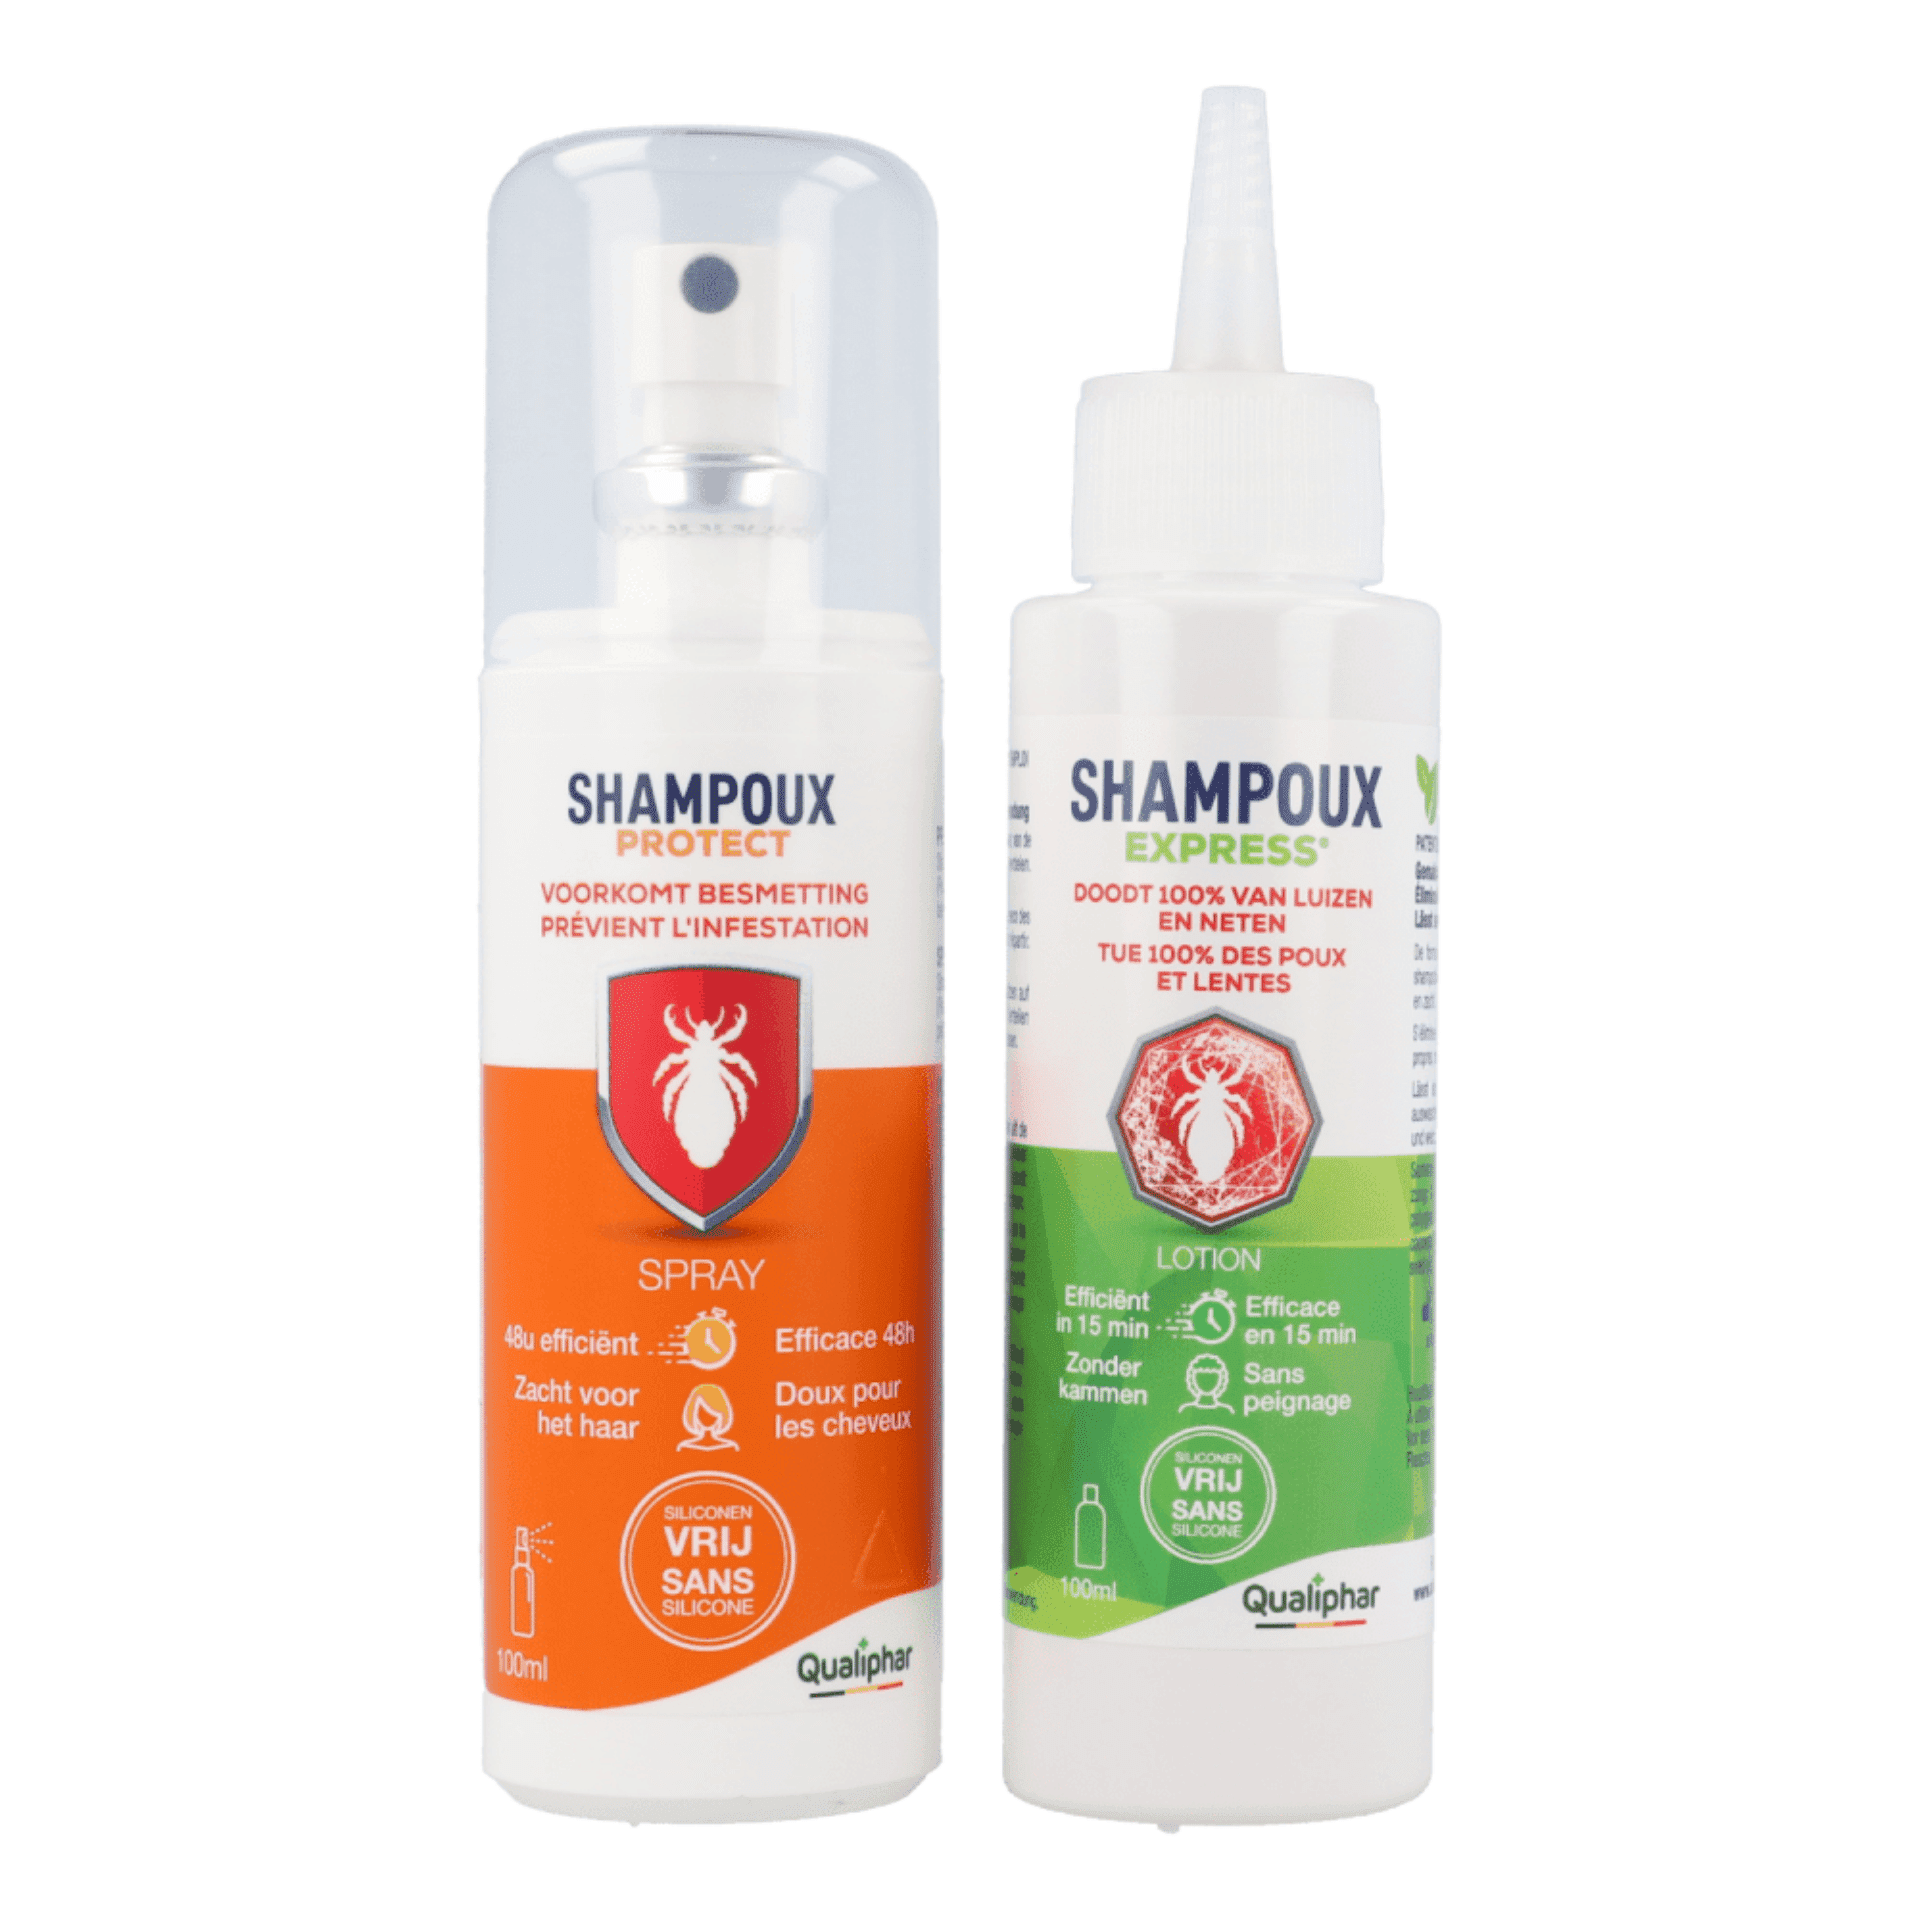 Shampoux Lotion Express + Forfait Promo Protect 100 ml + 100 ml